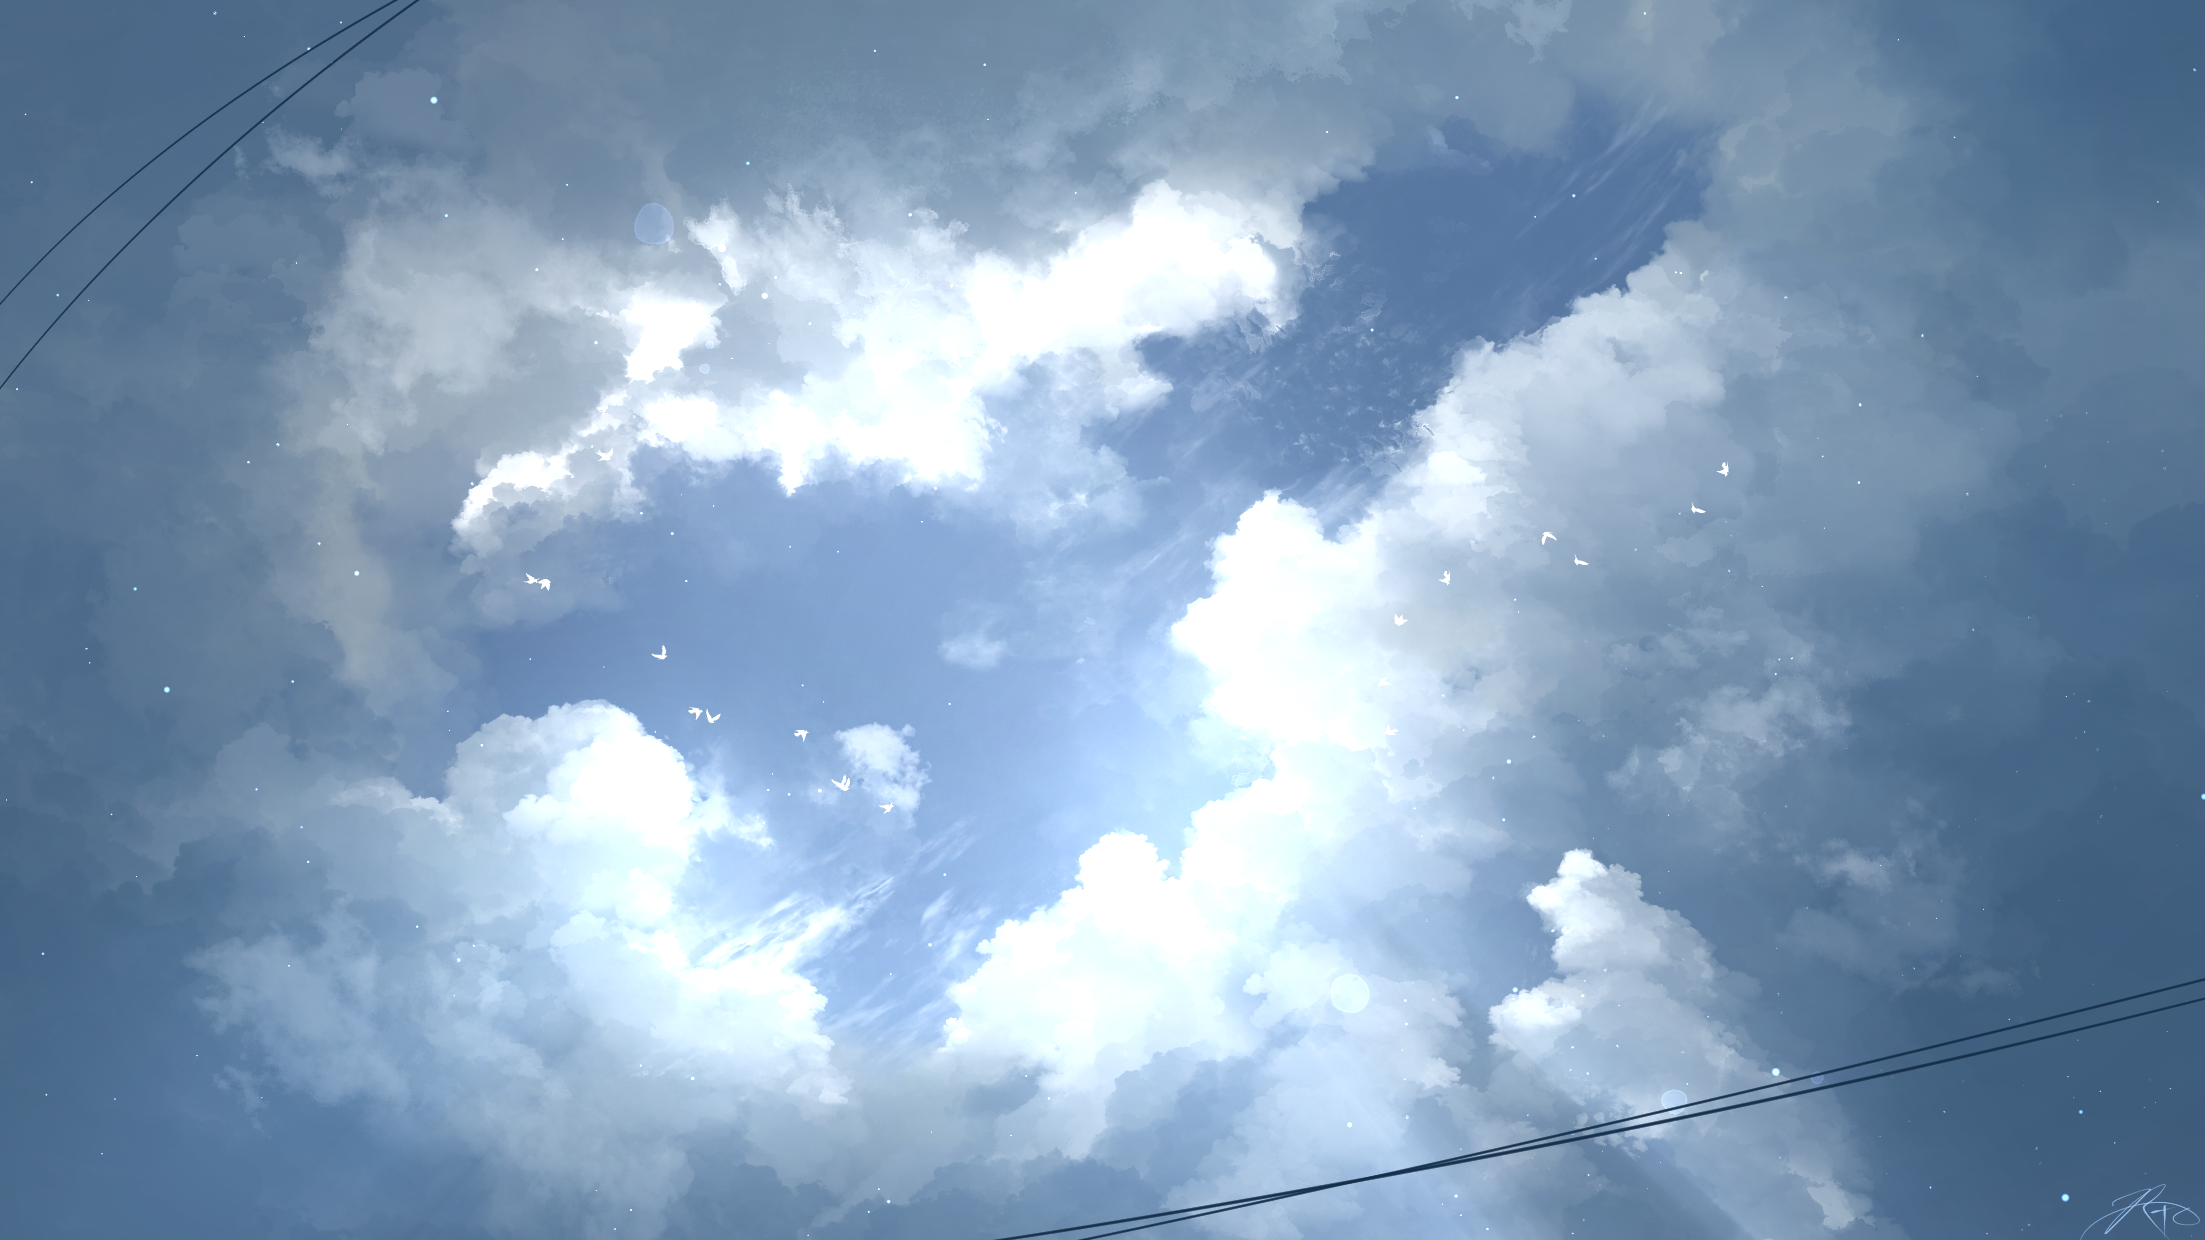 General 2205x1240 digital art artwork illustration sky clouds sunlight birds watermarked Runeiscute